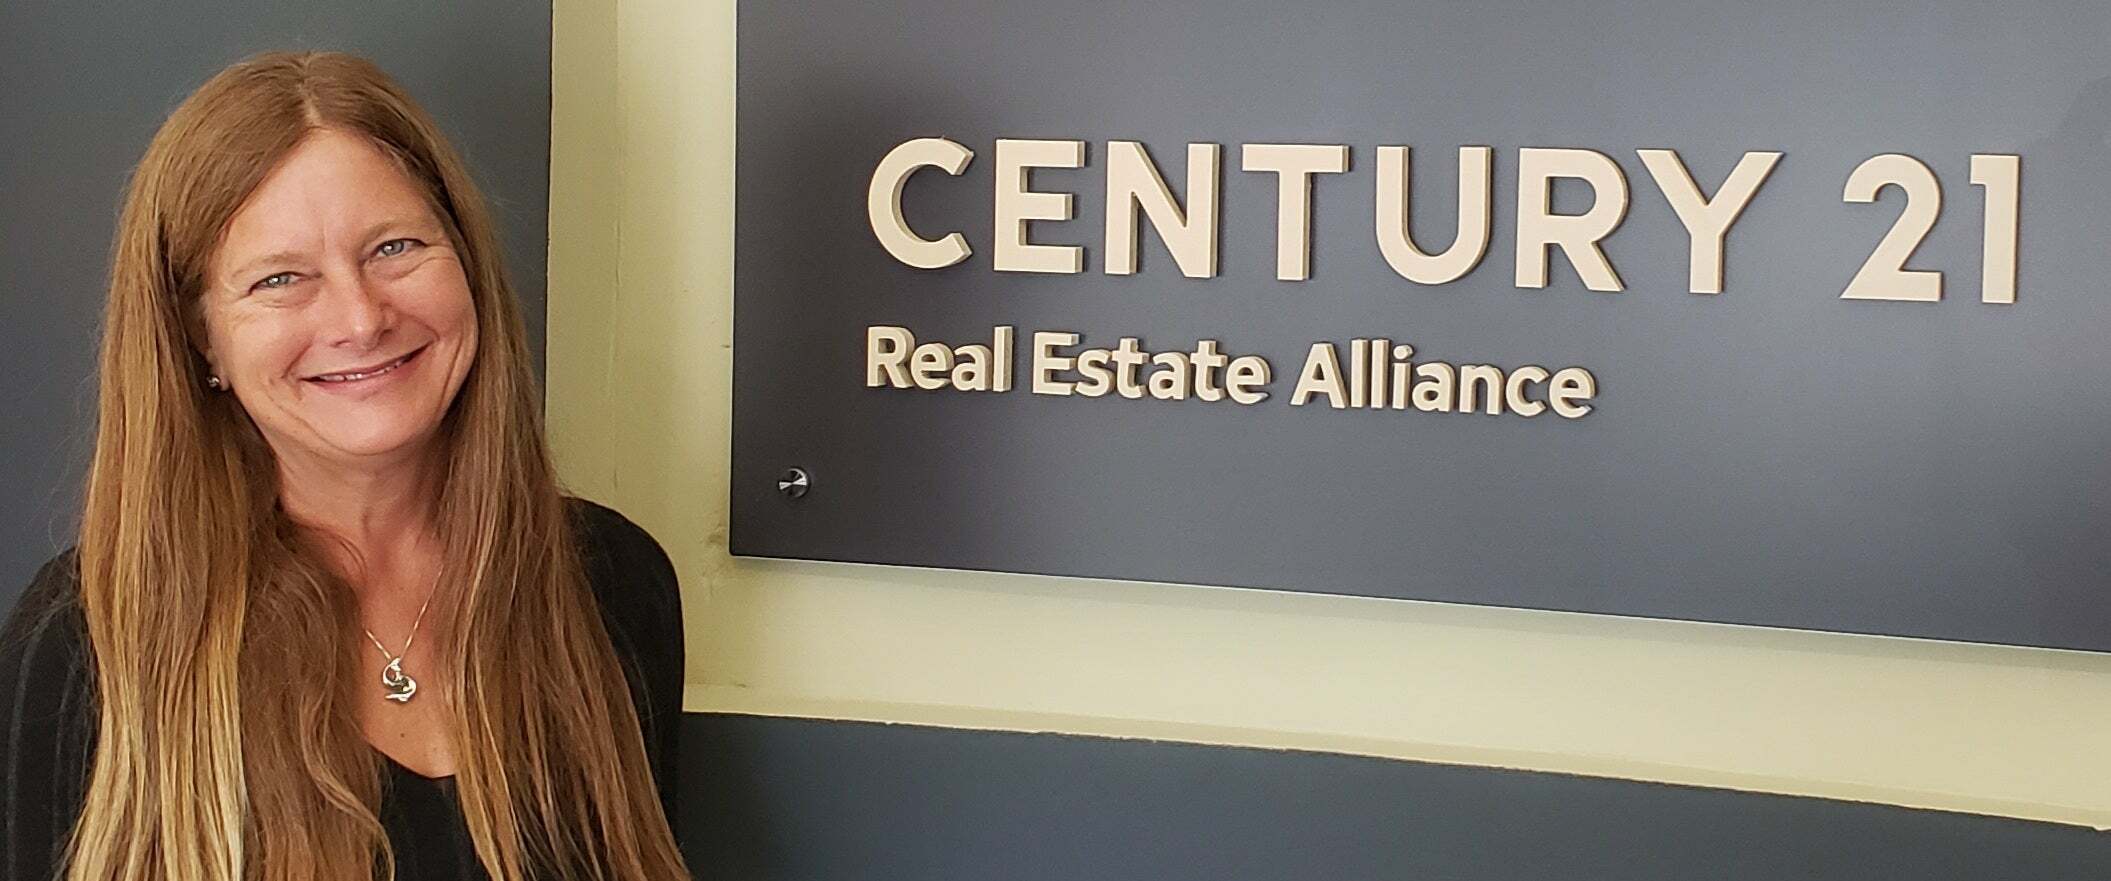 Christina Marshall, Real Estate Salesperson in Burlingame, Real Estate Alliance